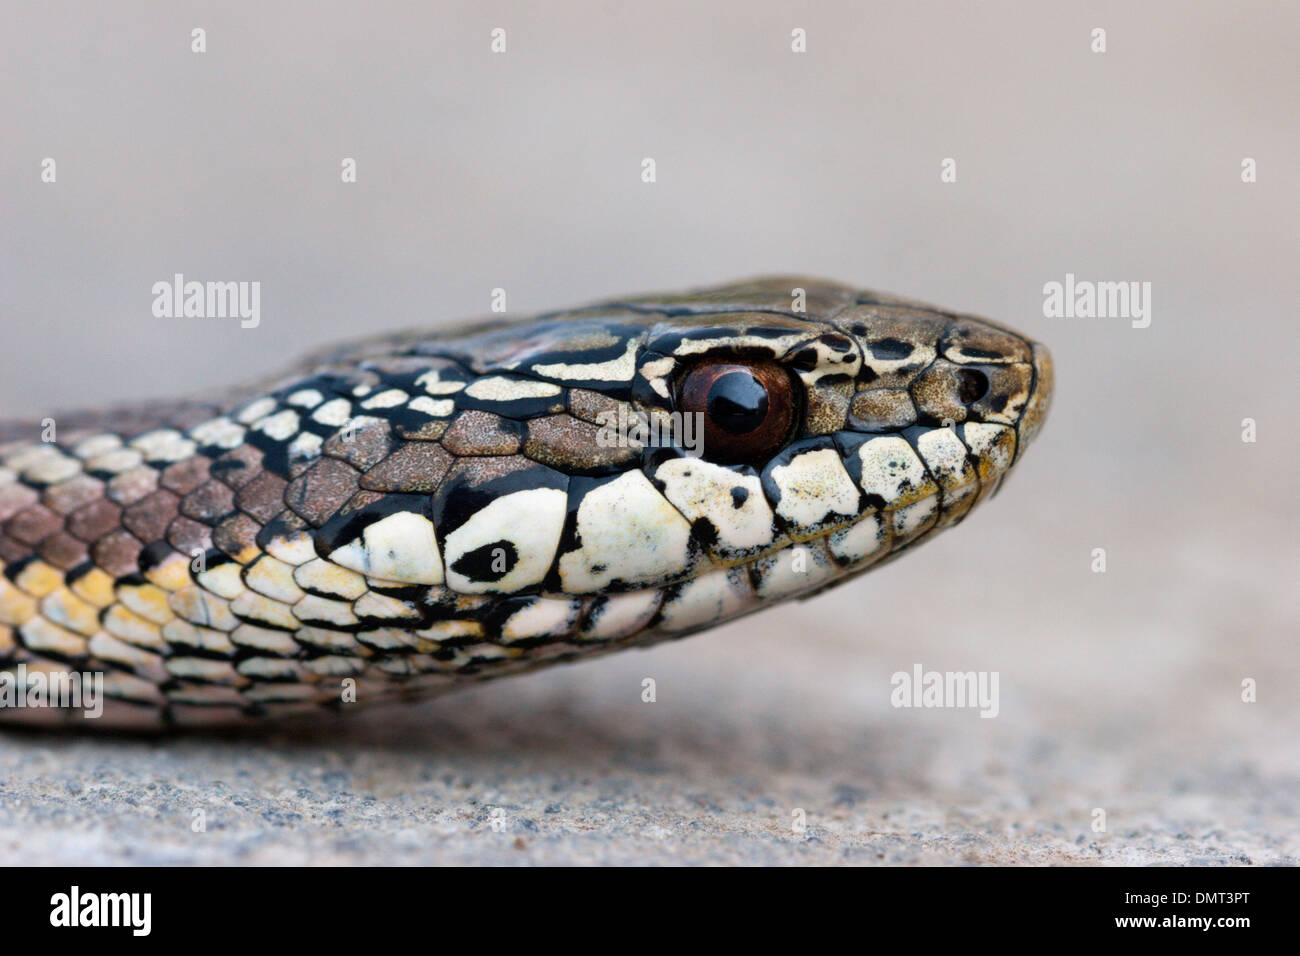 snake poisonous venomous culebra con cola larga Chile Stock Photo